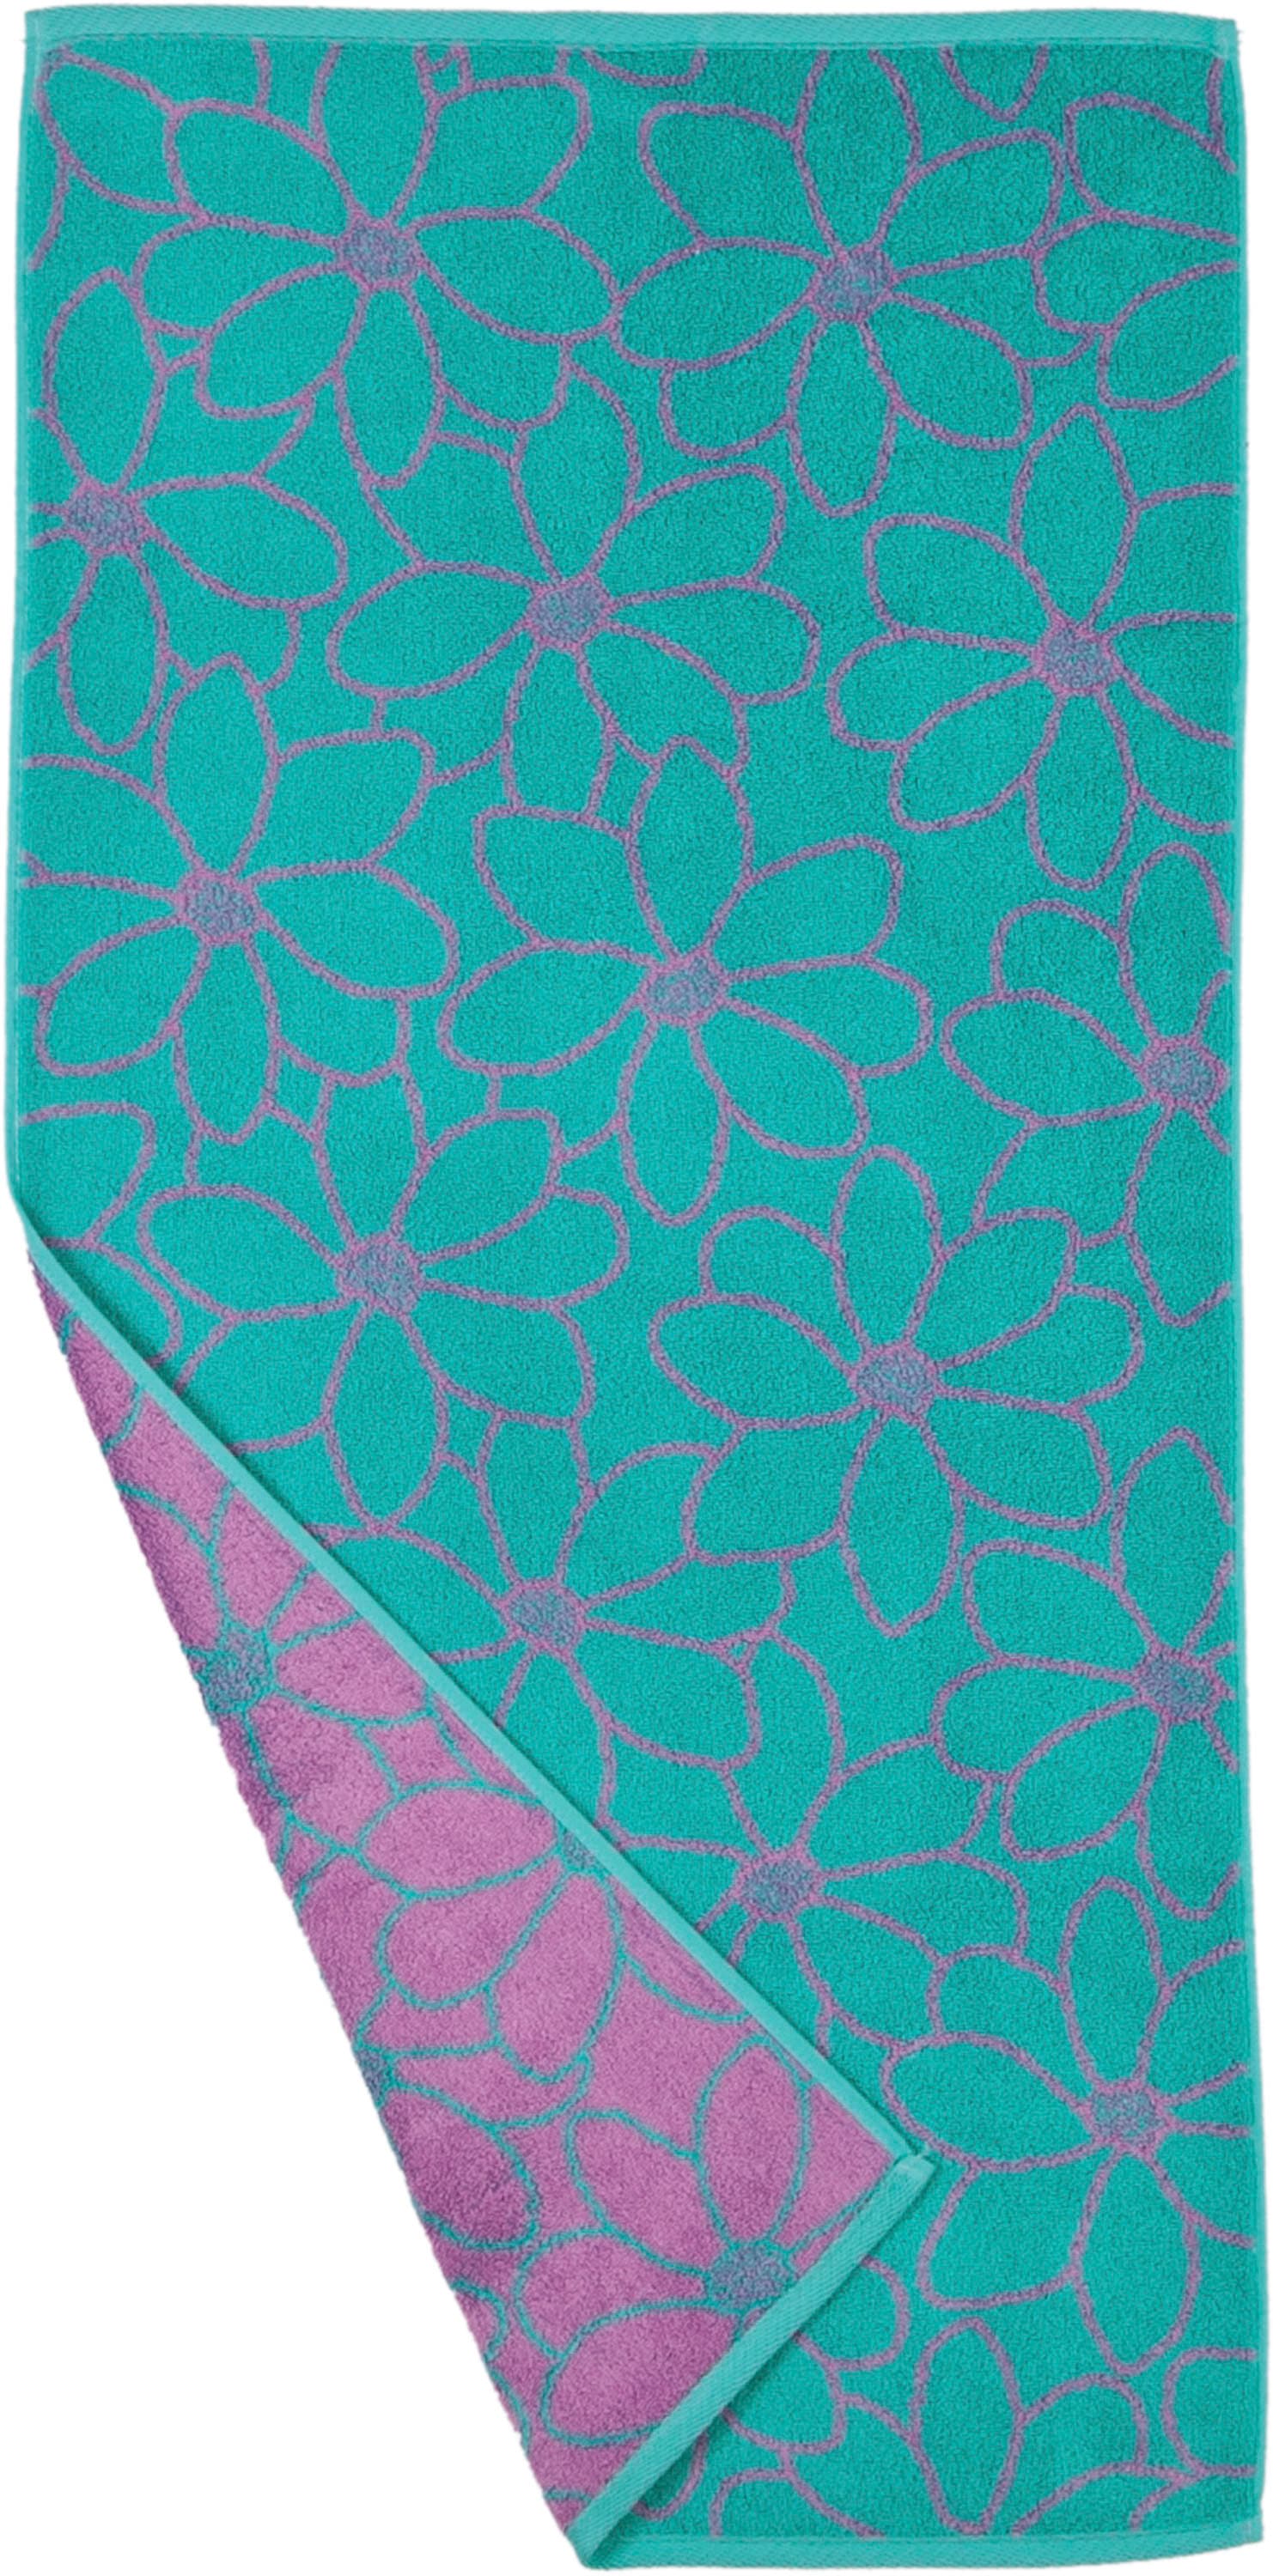 ROSS Handtücher »Blütenfond«, (2 aus schnell bequem bestellen und feinster St.), Mako-Baumwolle